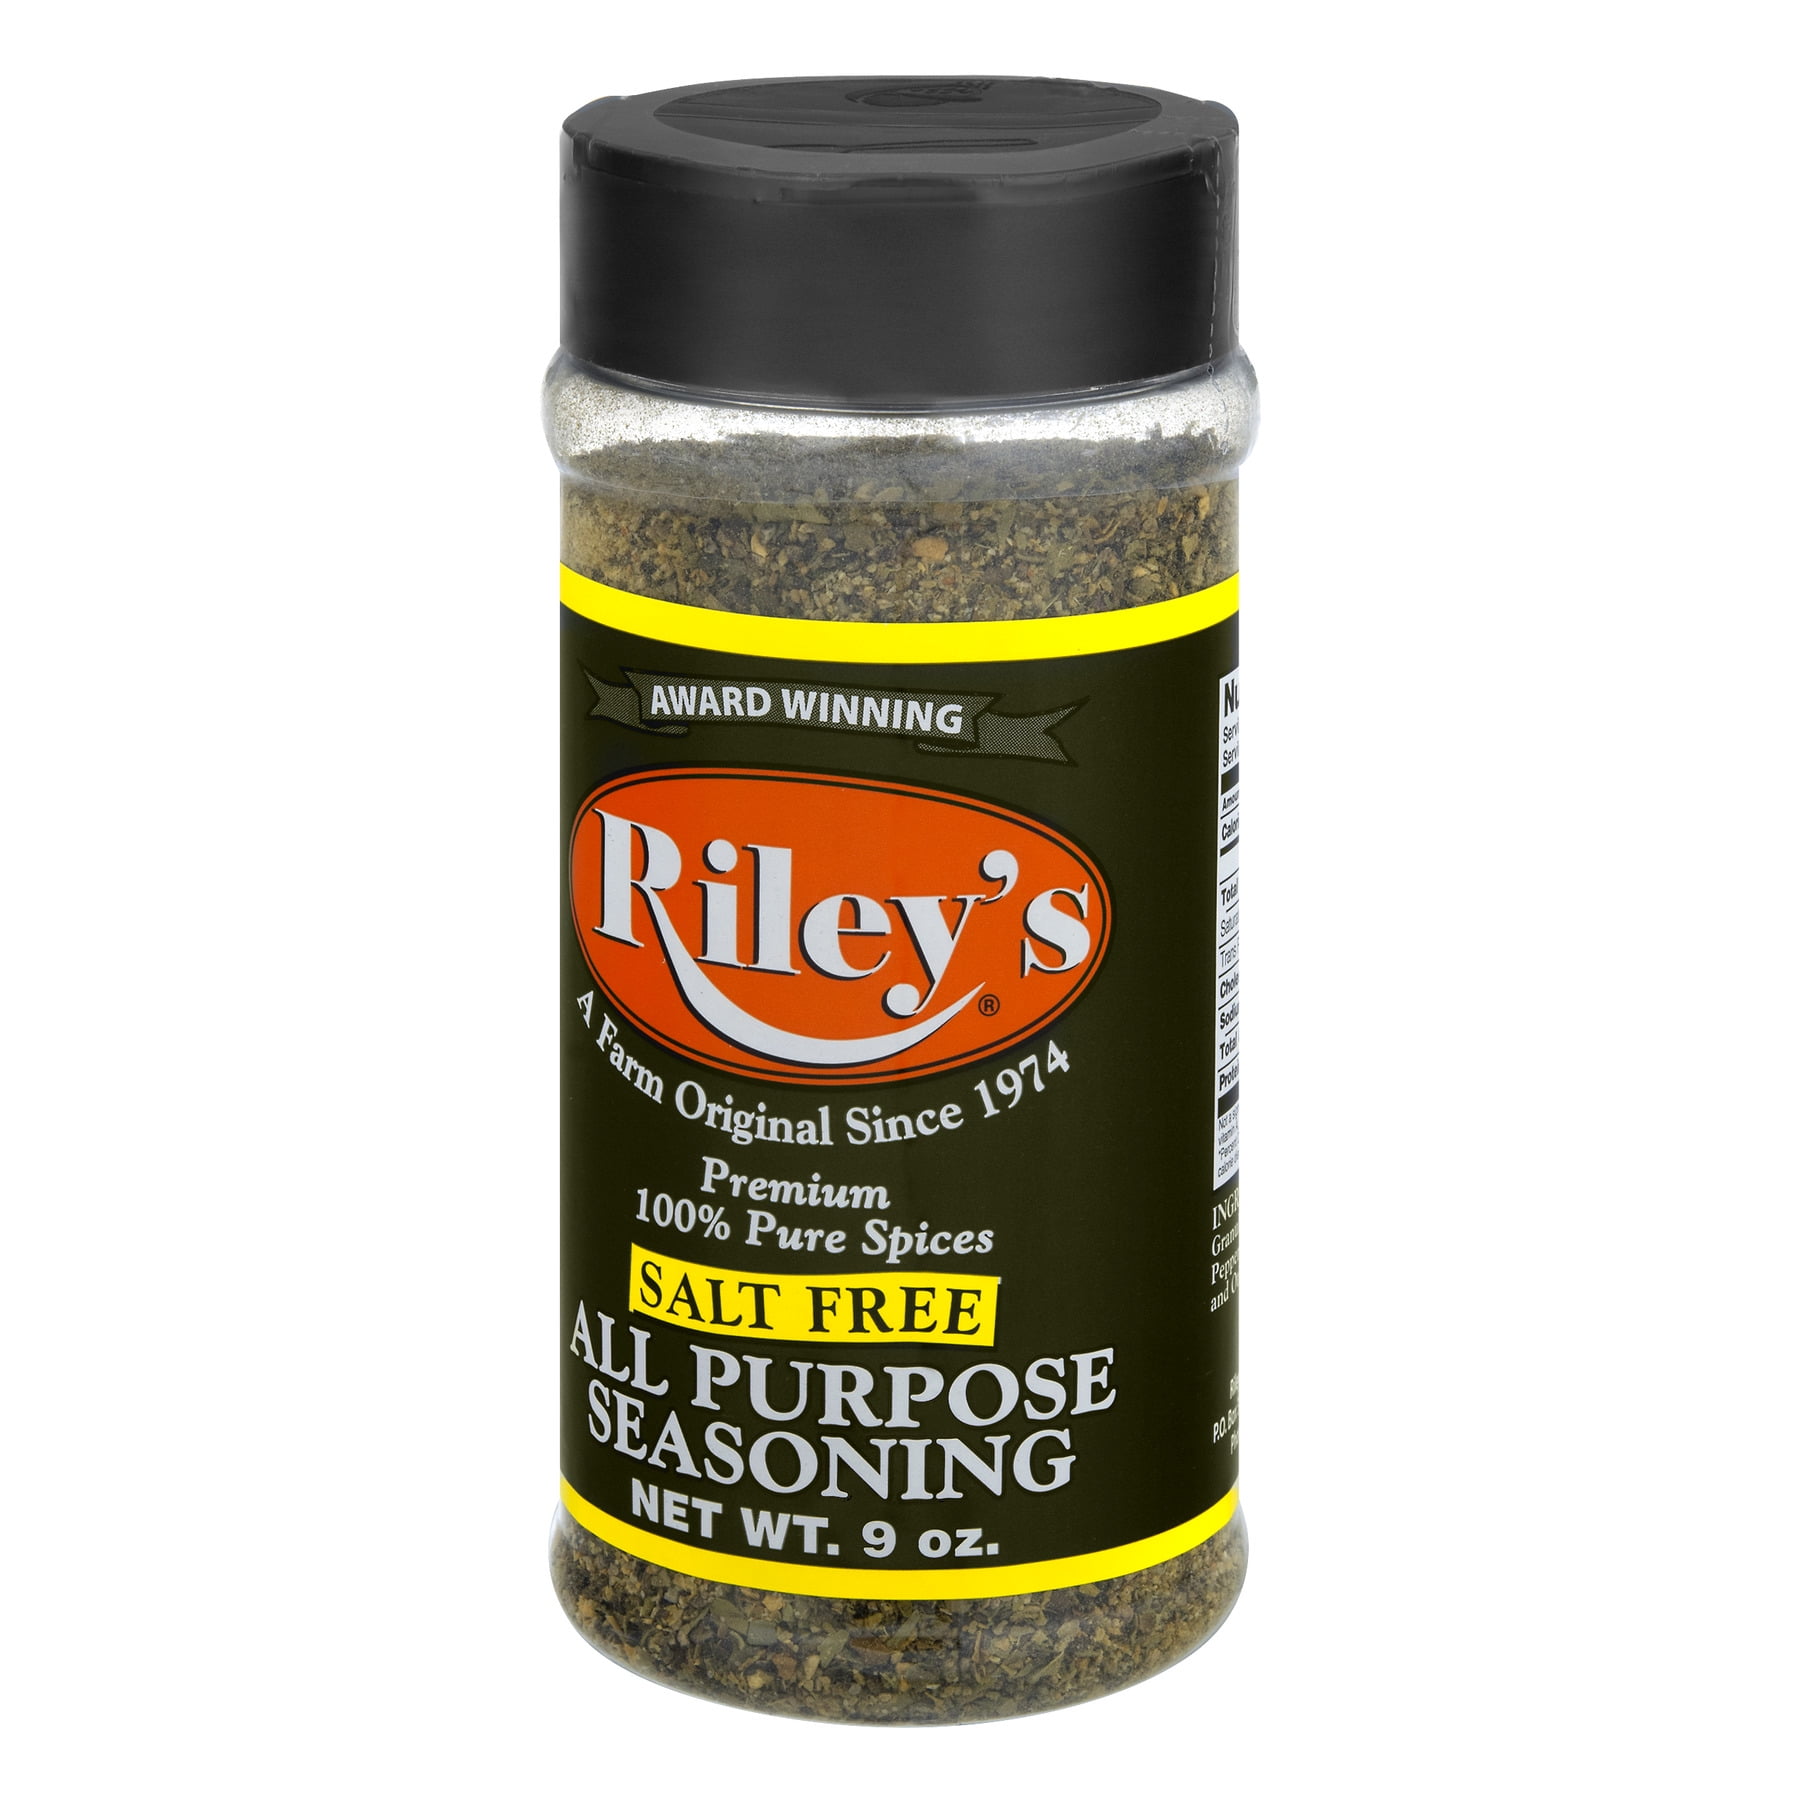 All-Purpose – Riley's Seasonings